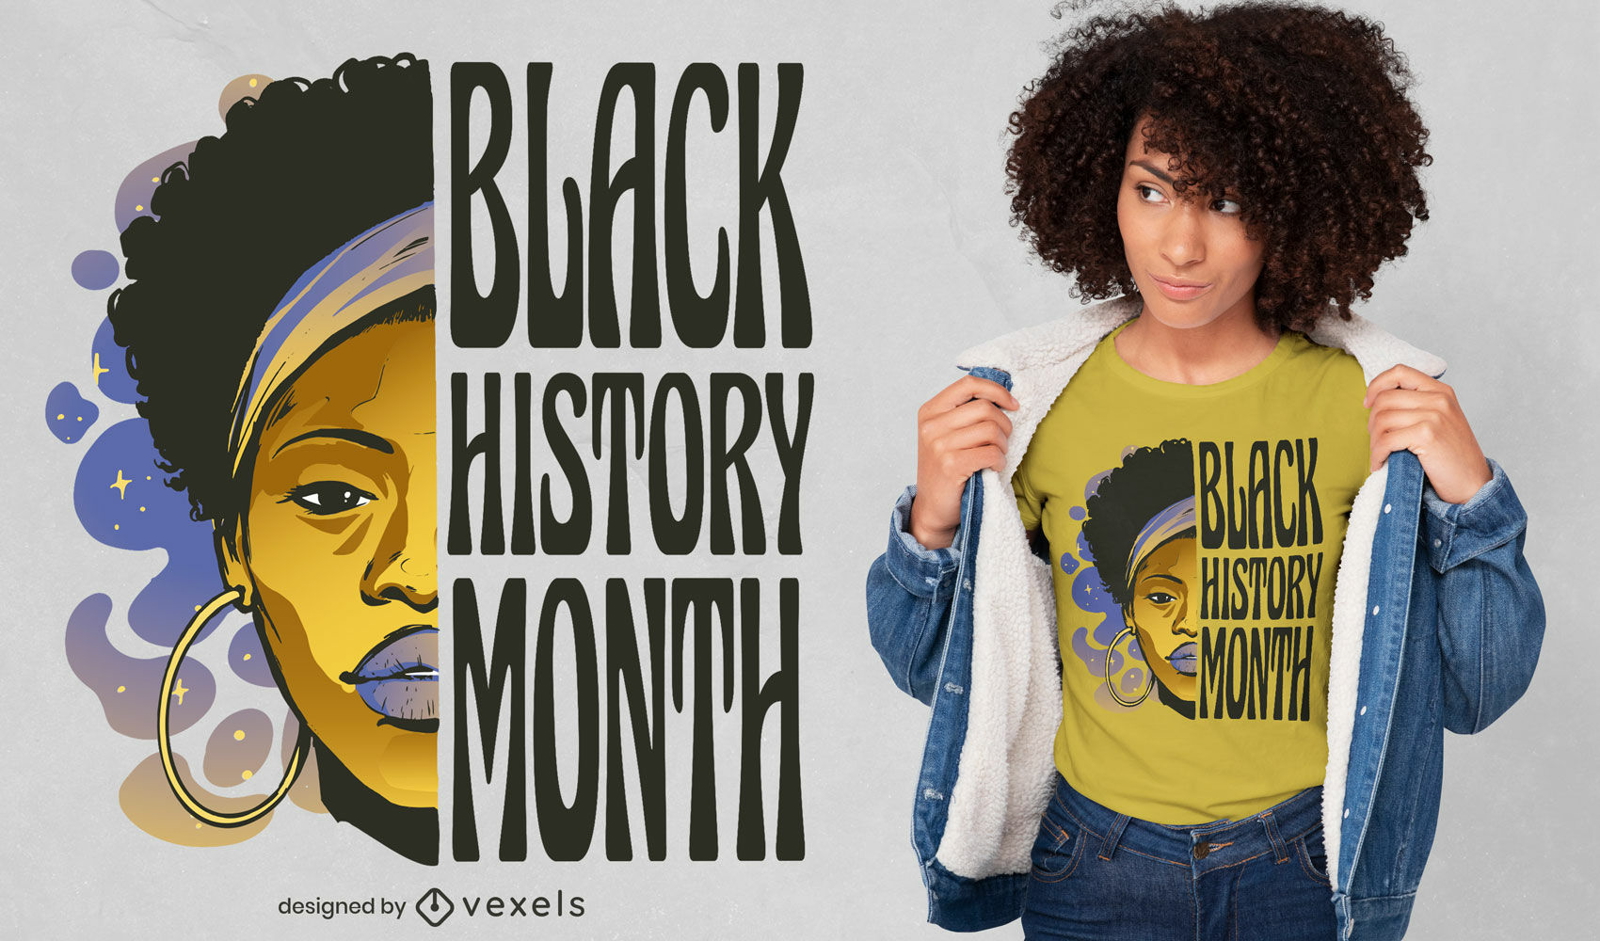 Teen artists design Meijer's Black History Month apparel